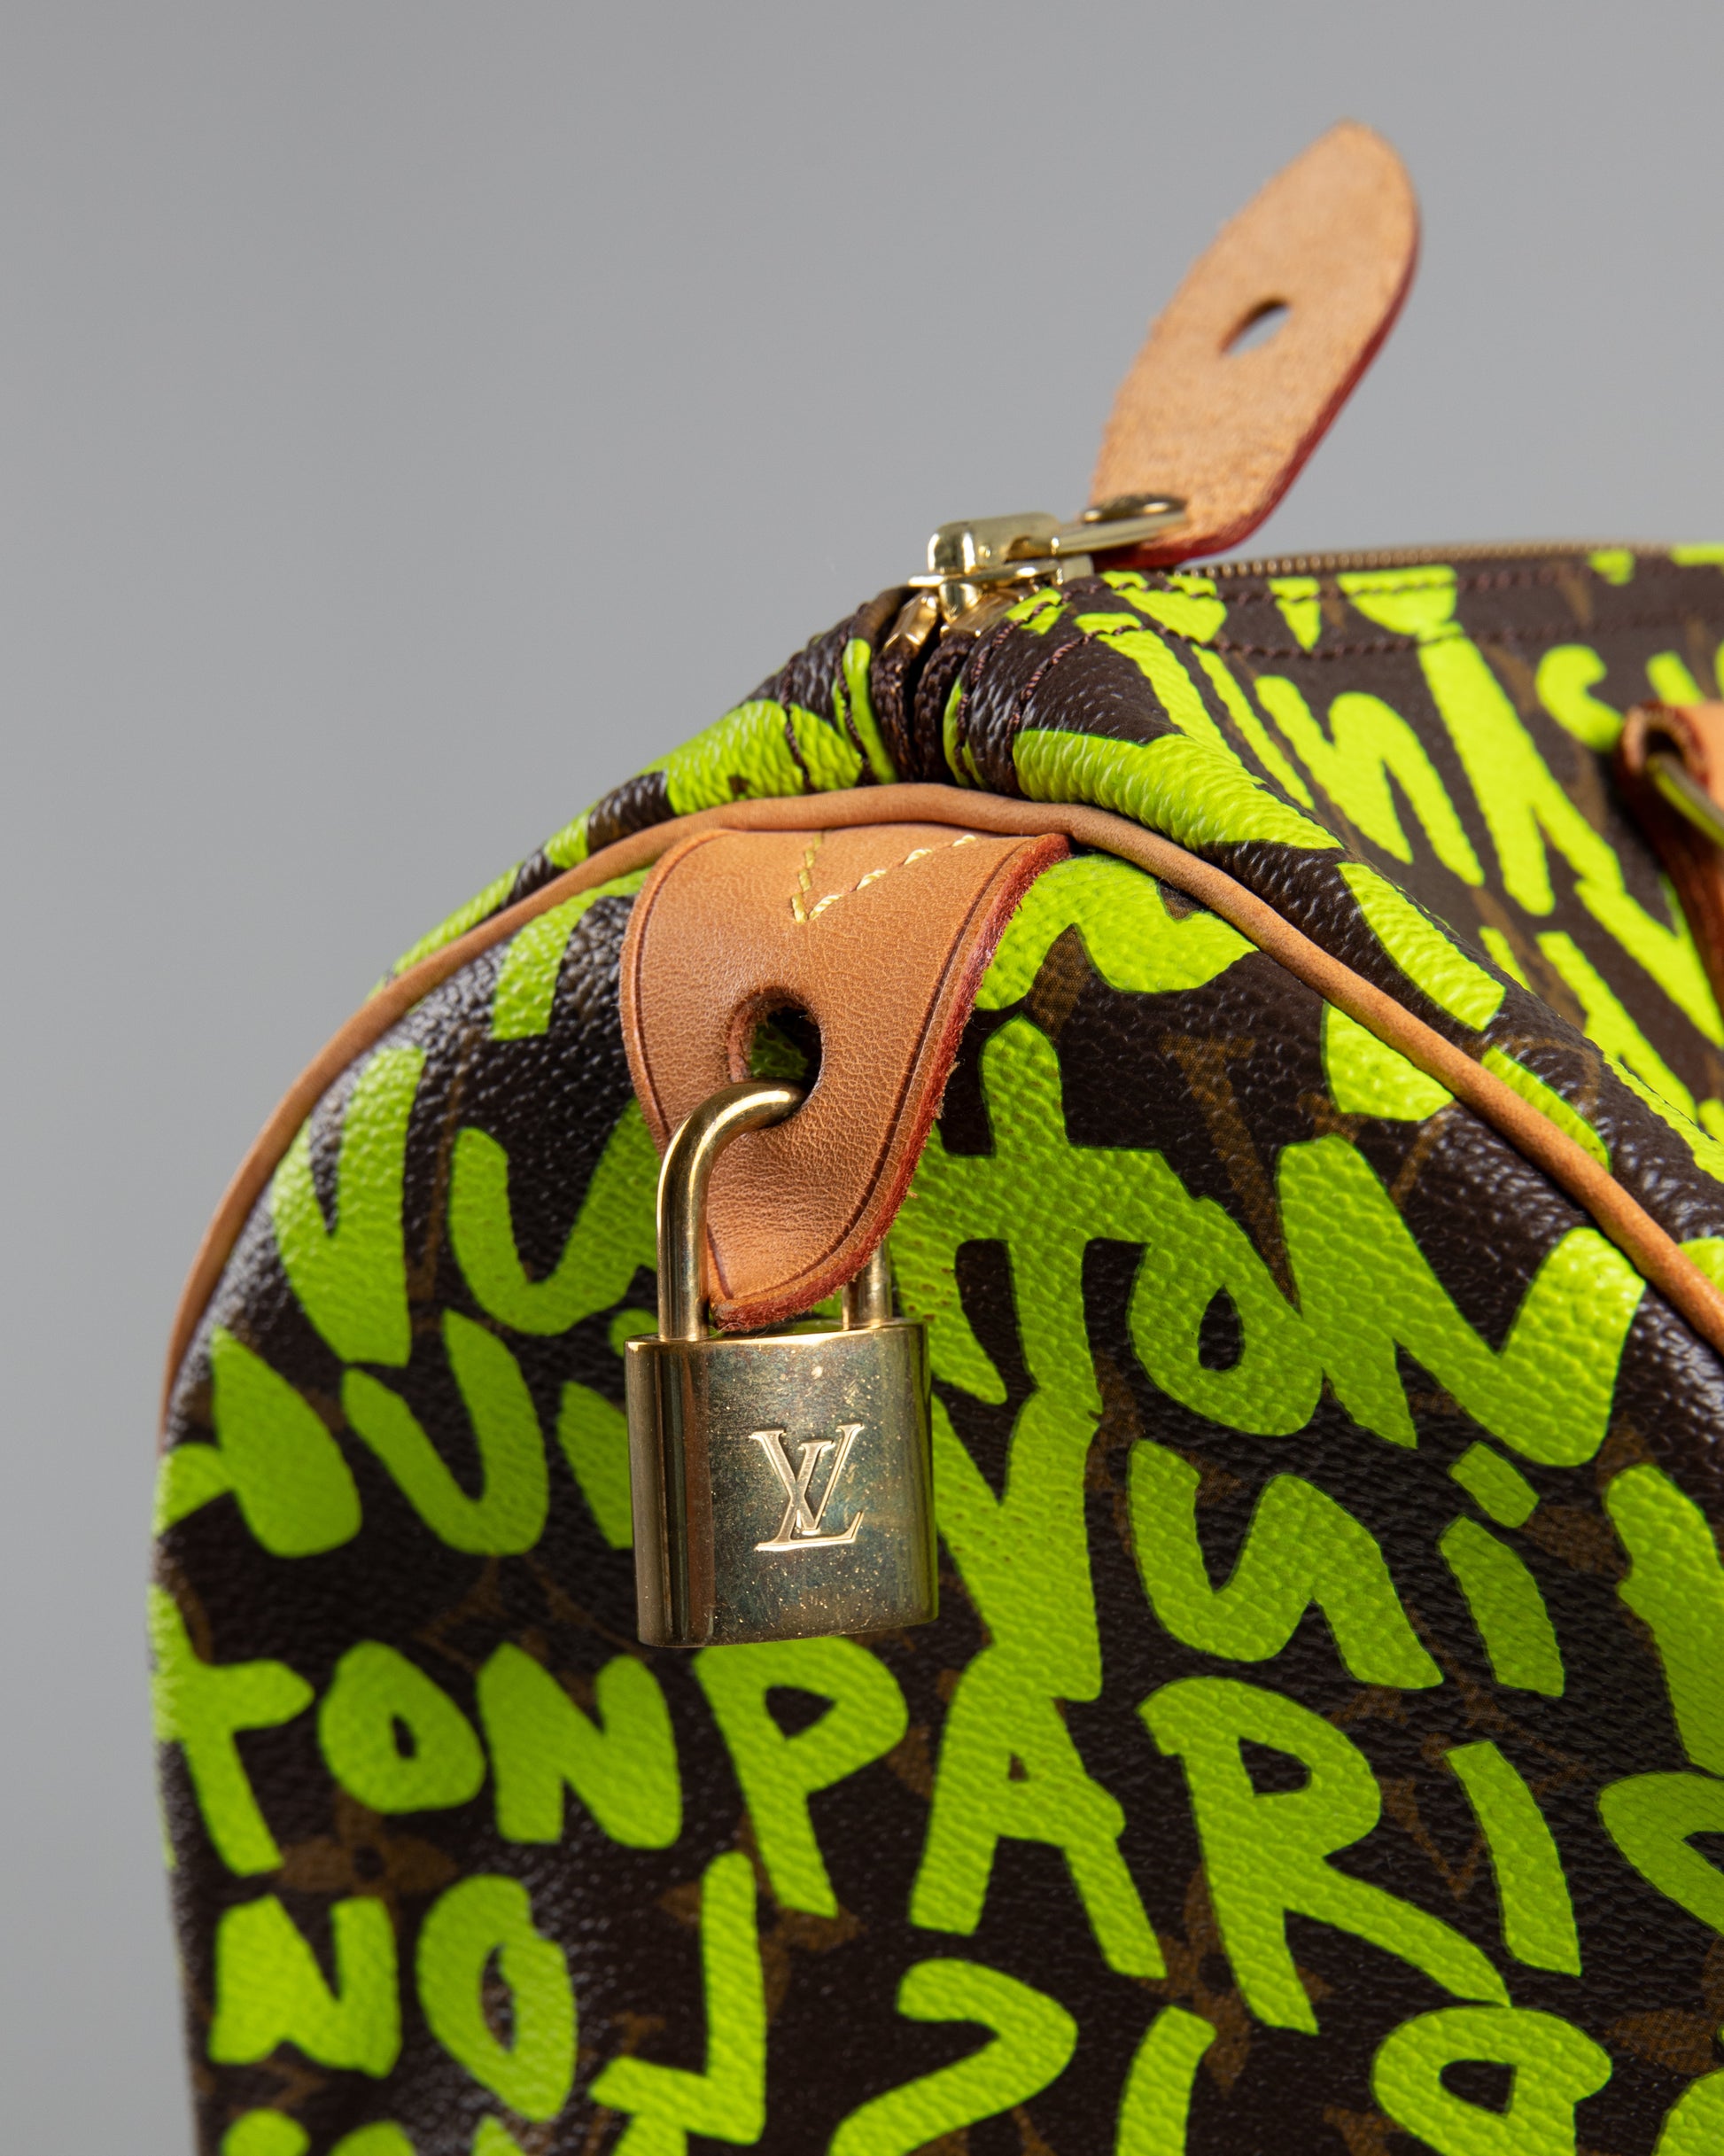 Louis Vuitton Vert Graffiti Stephen Sprouse Speedy 30 Bag